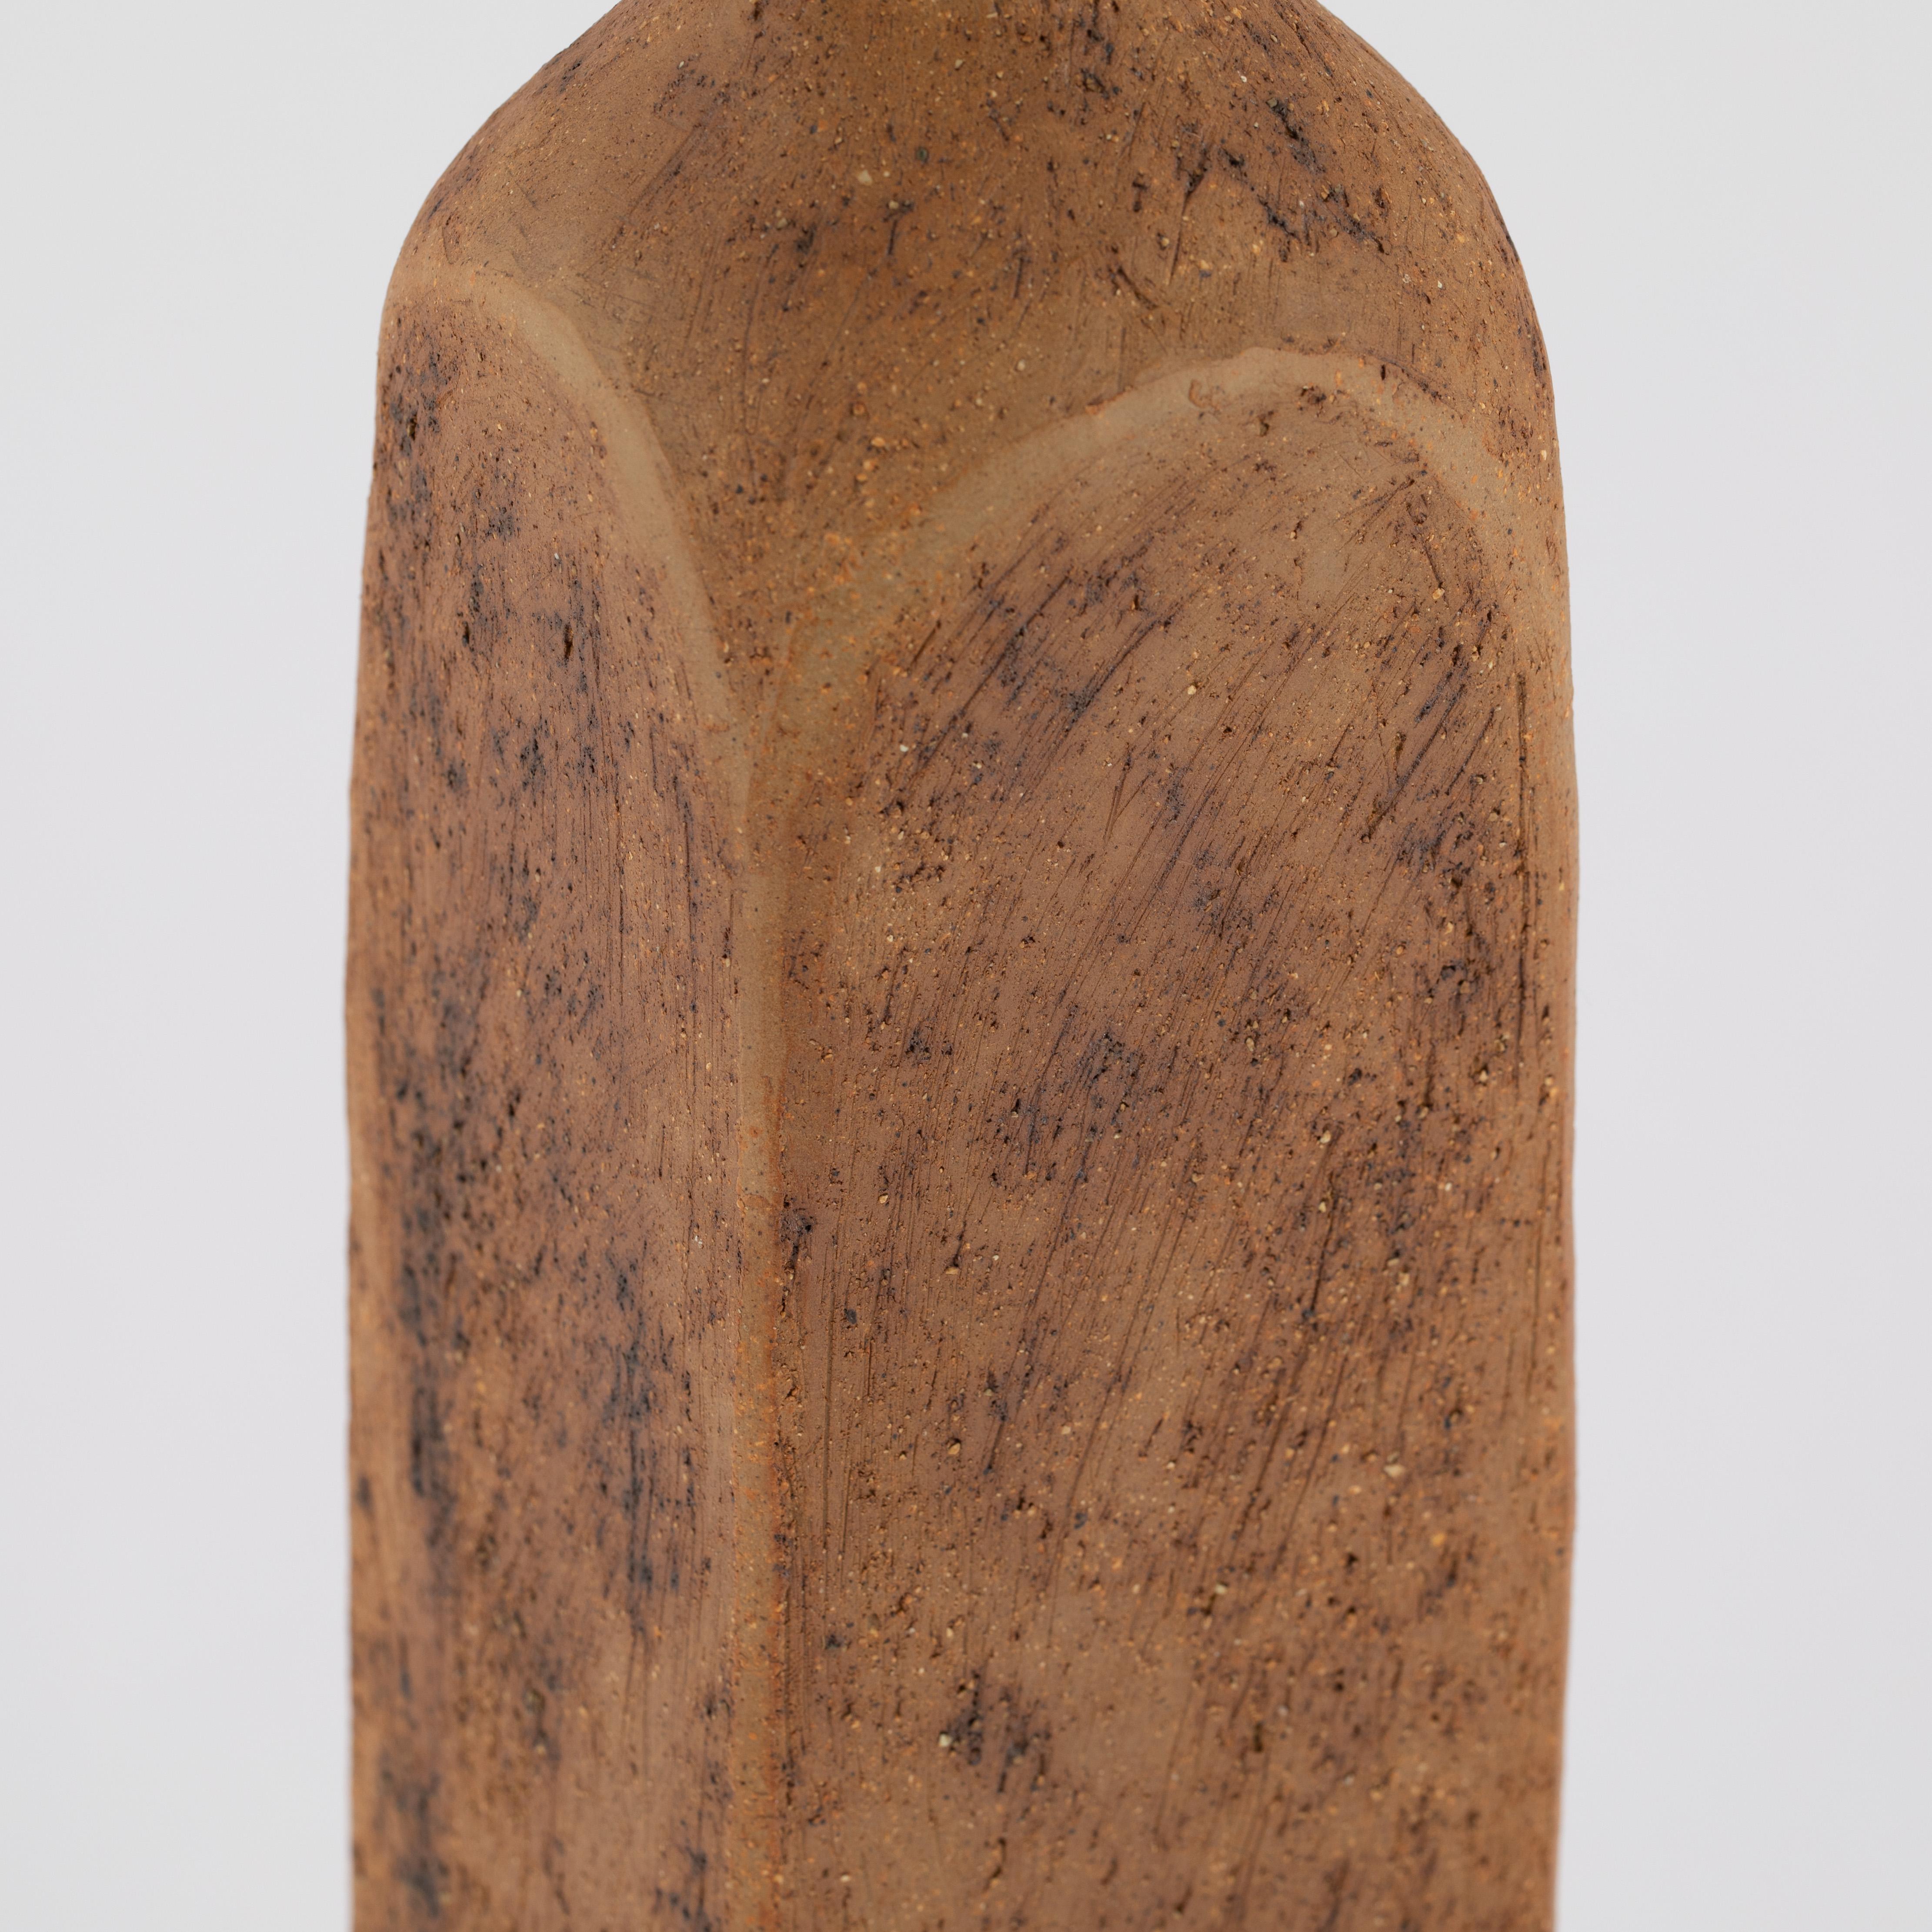 Late 20th Century Curt Magnus Addin Tall Stoneware Vase with Aqua-Glaze Top, circa 1970s For Sale